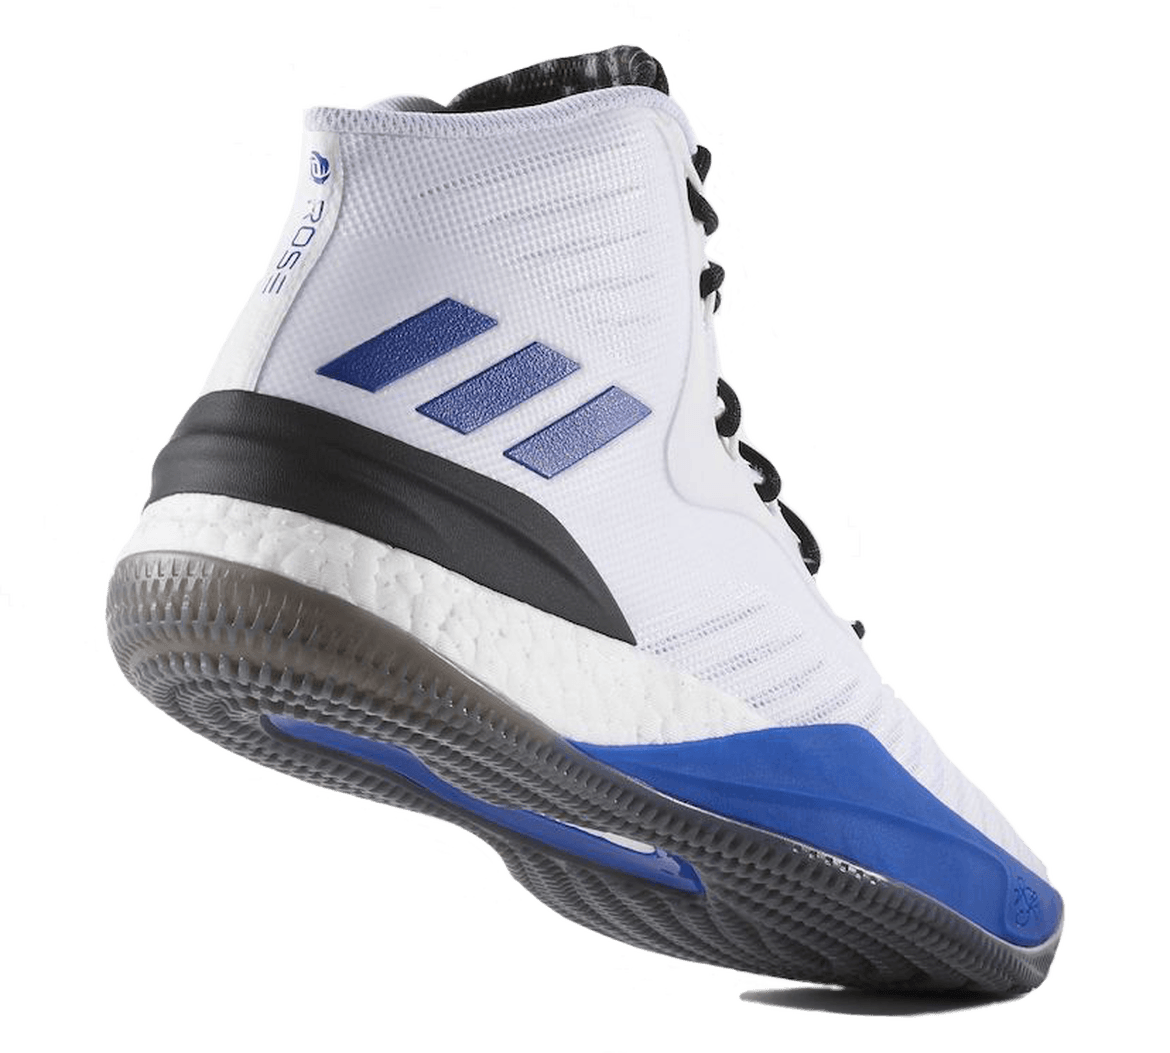 Adidas D Rose 8 - Review, Deals, Pics of 4 Colorways